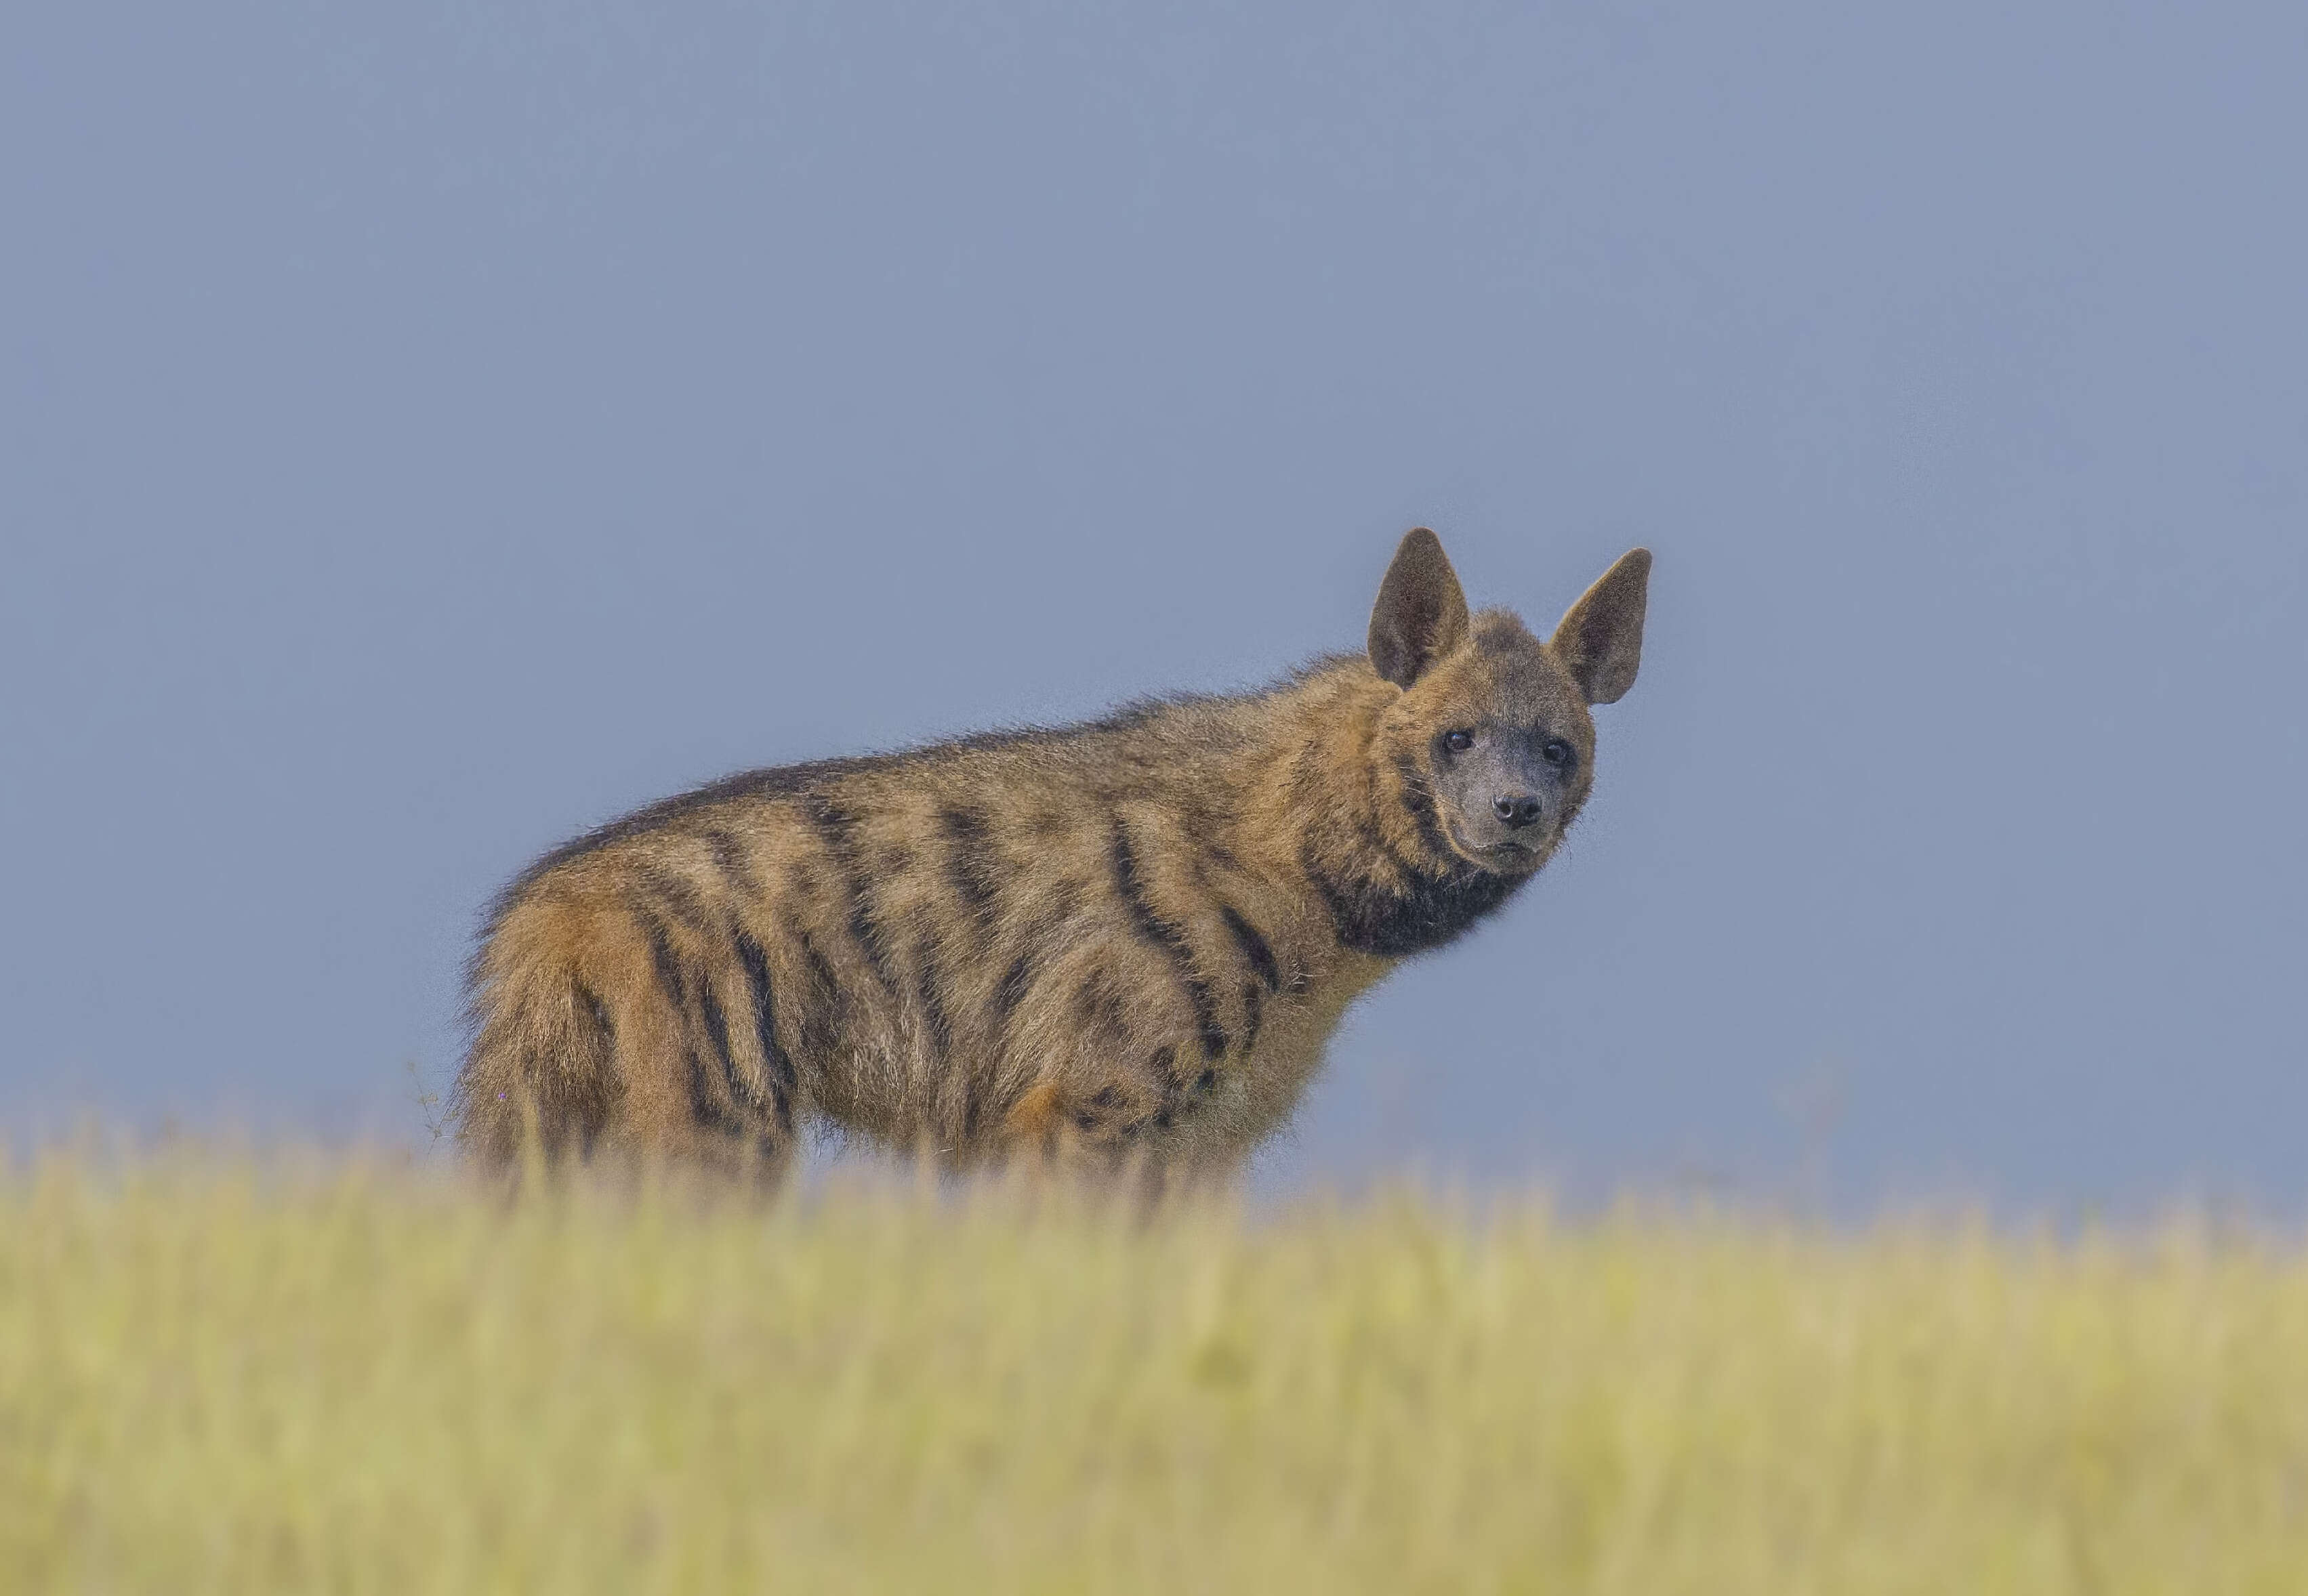 Image of Striped Hyena